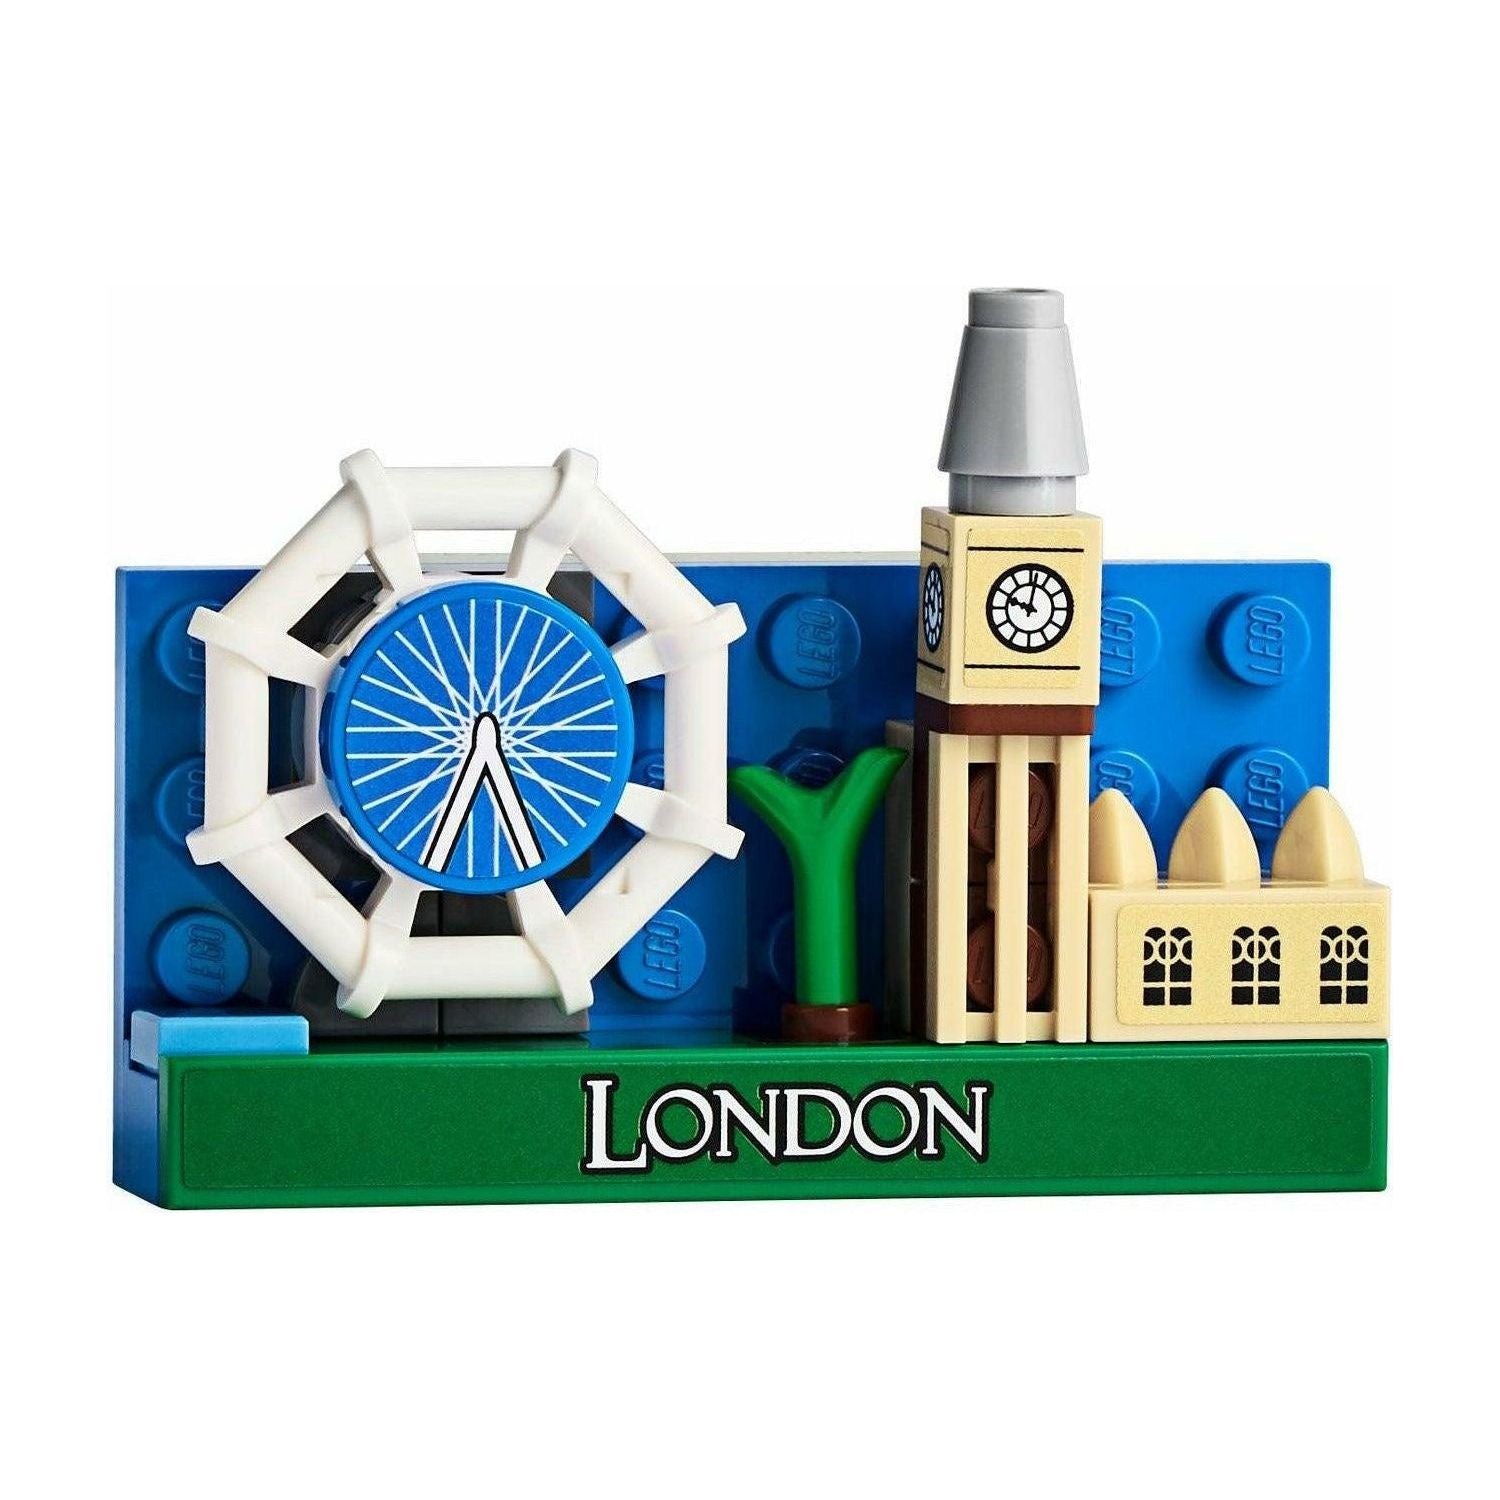 LEGO 854012 London Magnet Build 27 Pieces - BumbleToys - 18+, Architecture, Boys, Girls, LEGO, OXE, Pre-Order